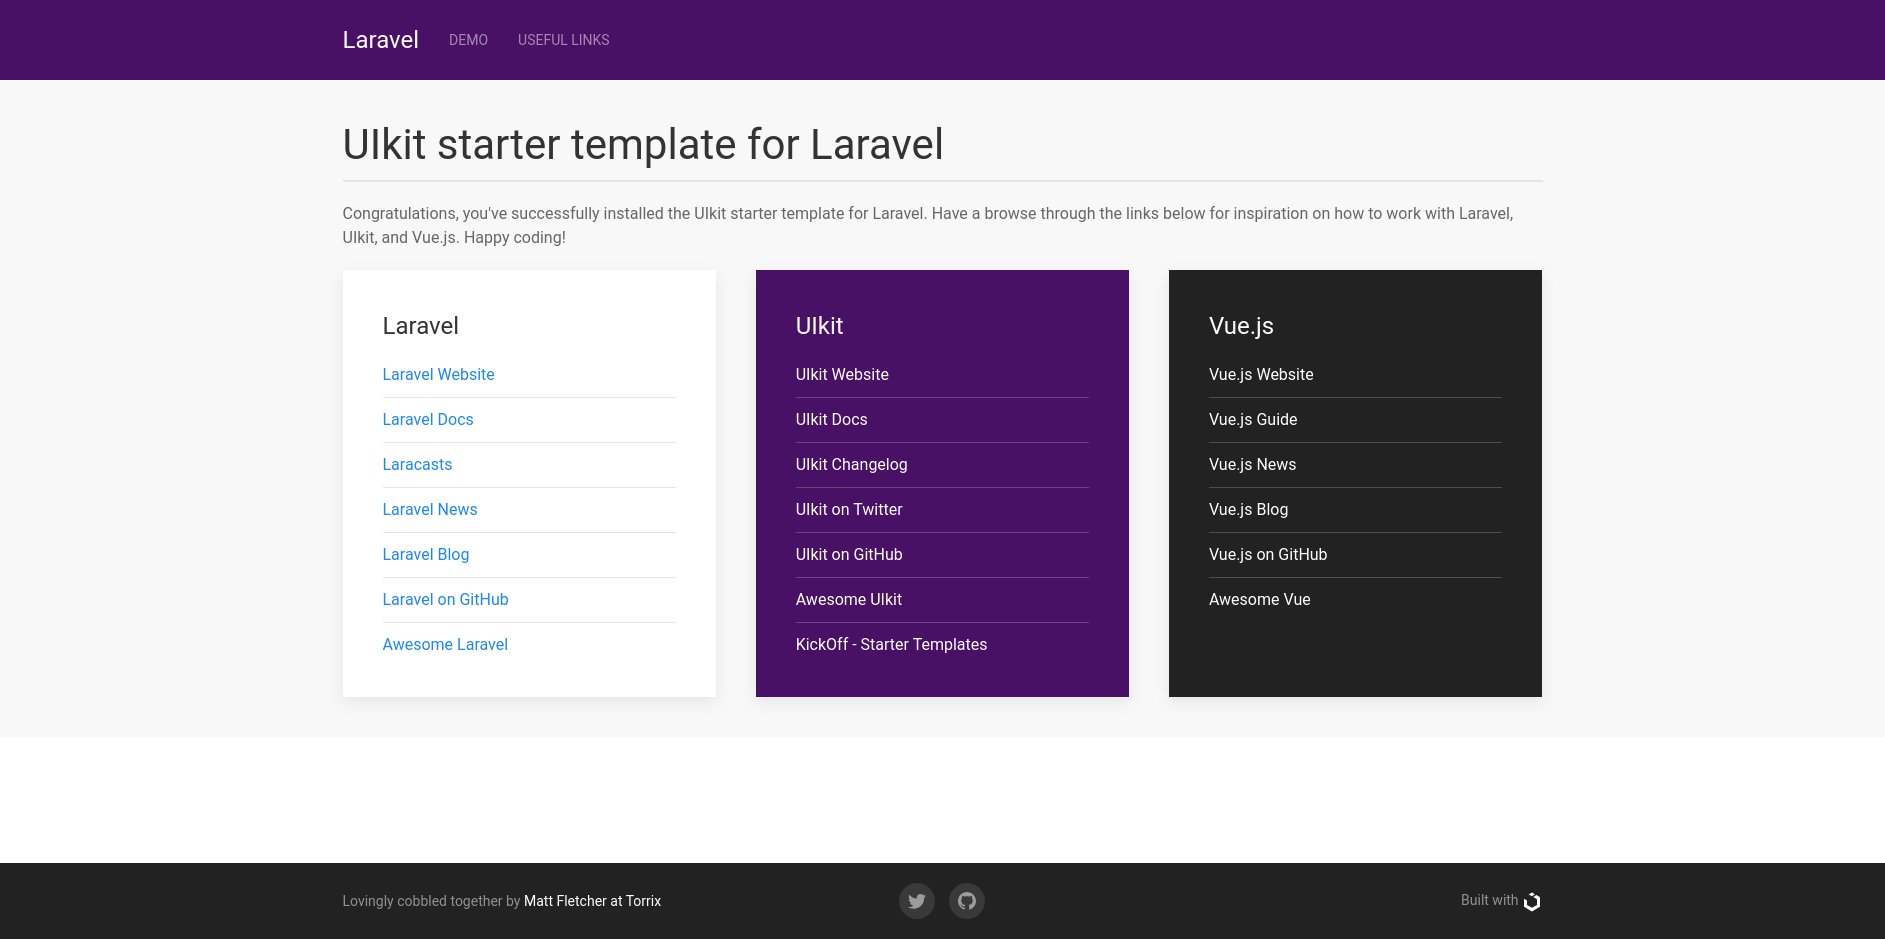 A screenshot of the UIkit starter template for Laravel